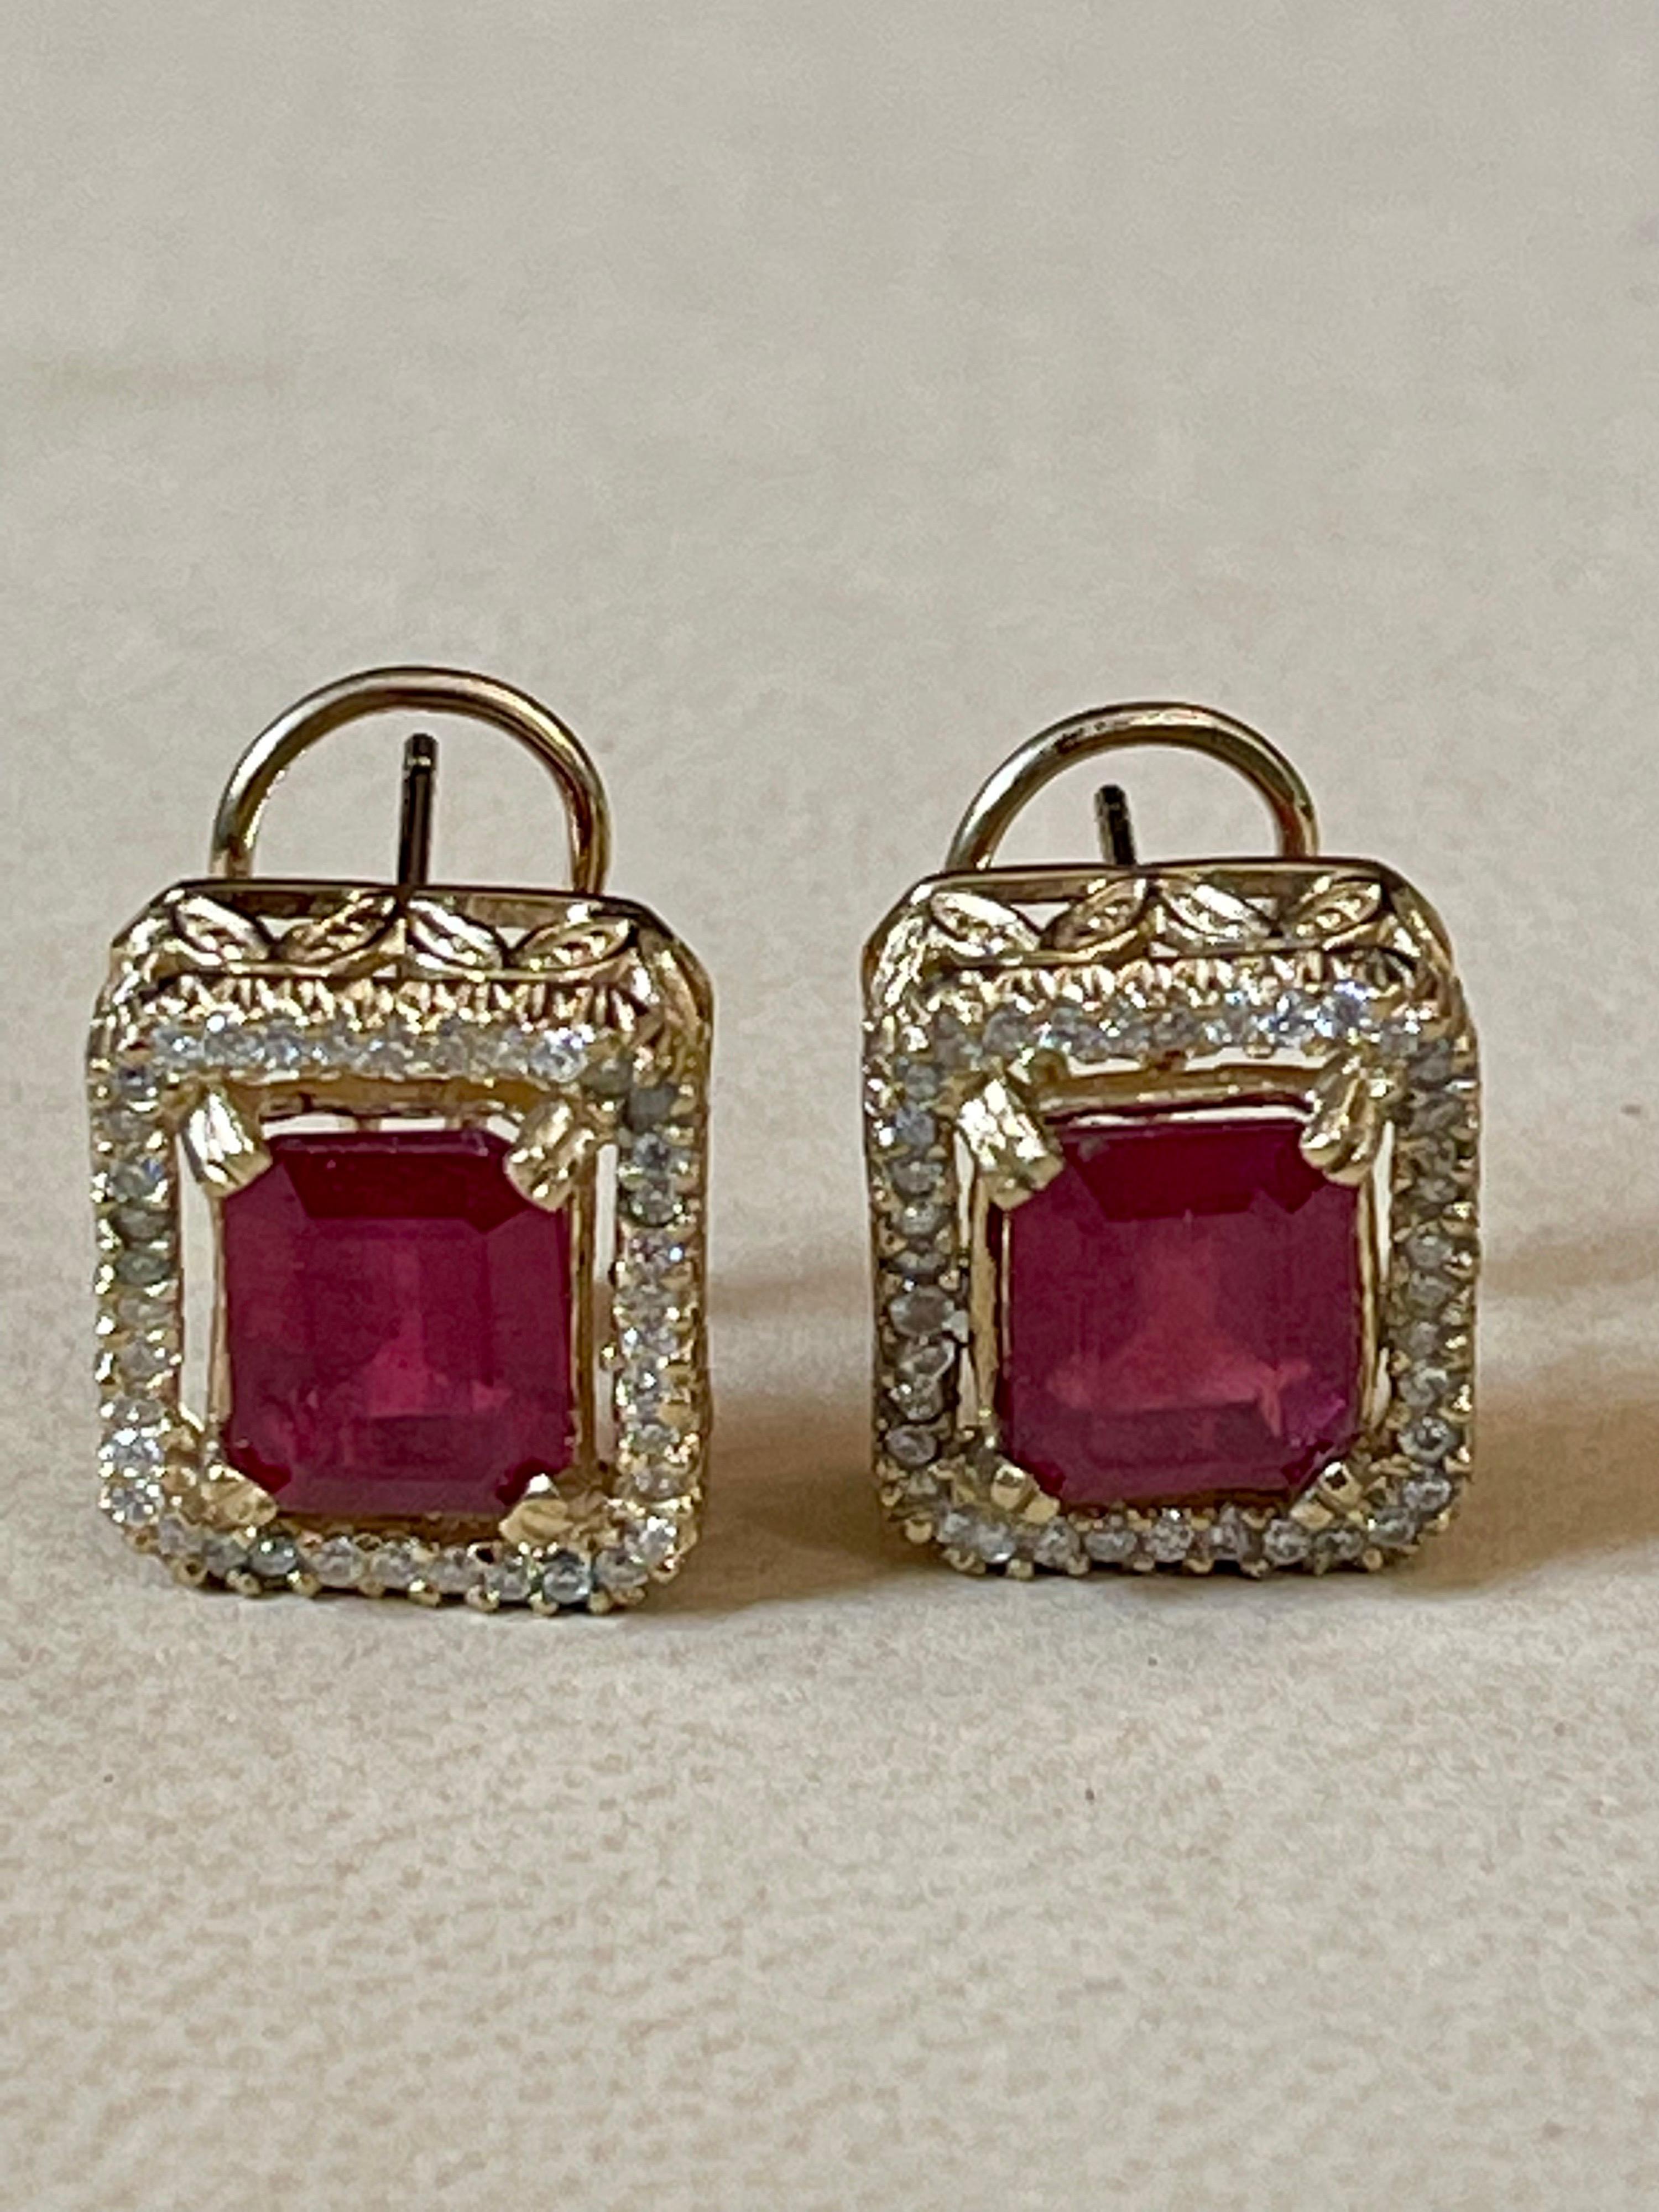 6 Carat Emerald Cut Treated Ruby & .7 Ct Diamond Stud Earrings 14 Kt Yellow Gold 2